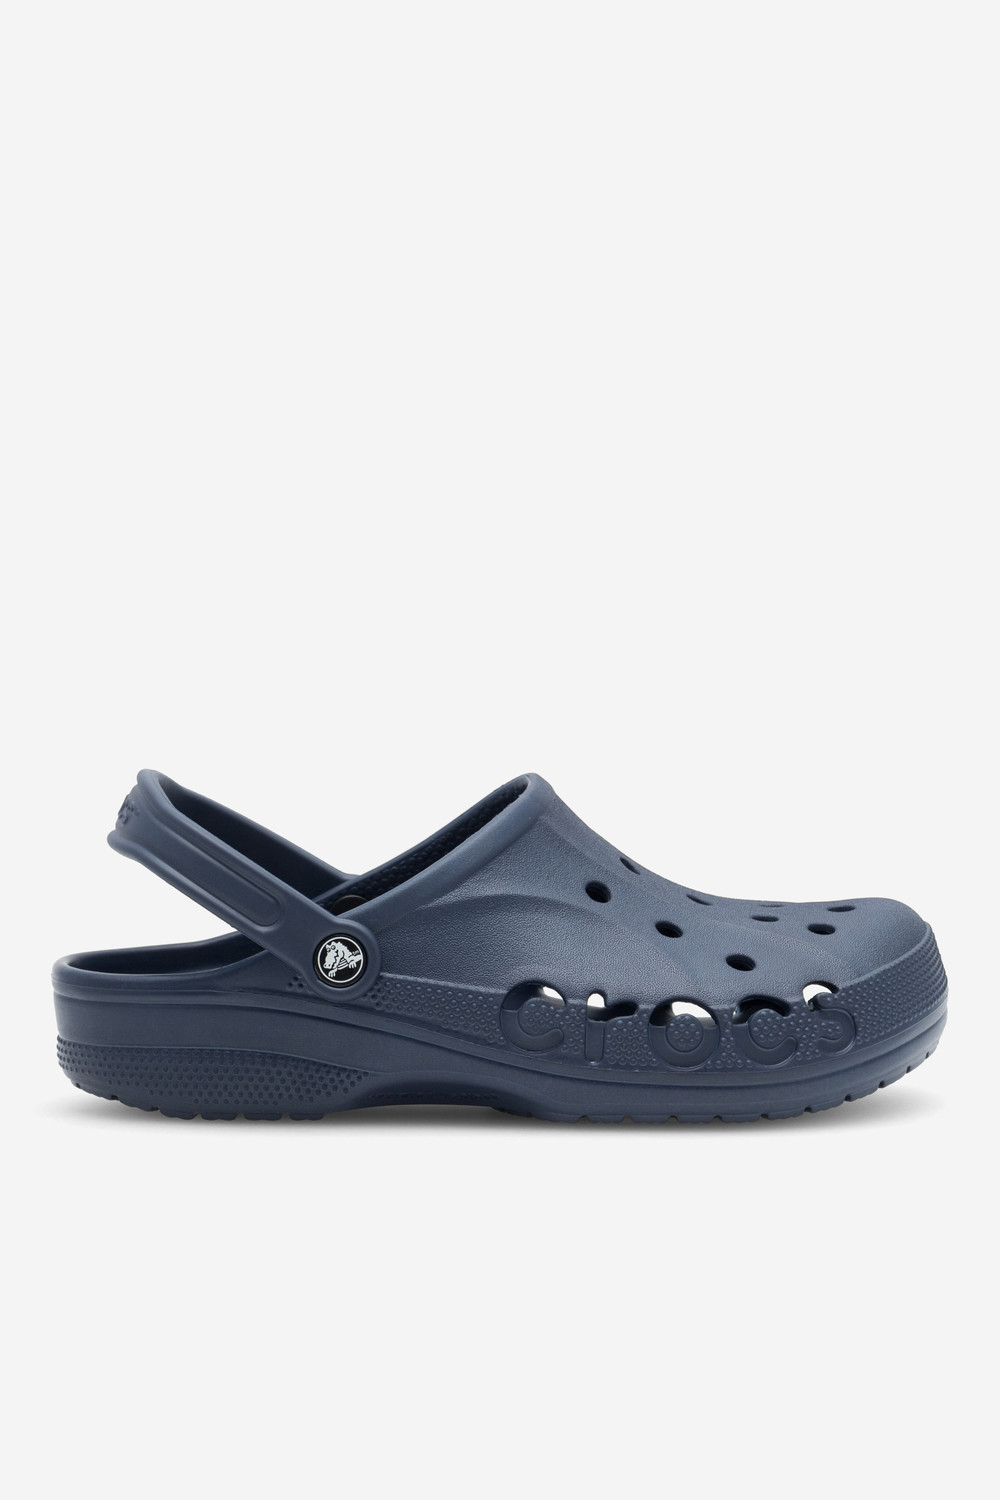 Bazénové pantofle Crocs BAYA 10126-410 W